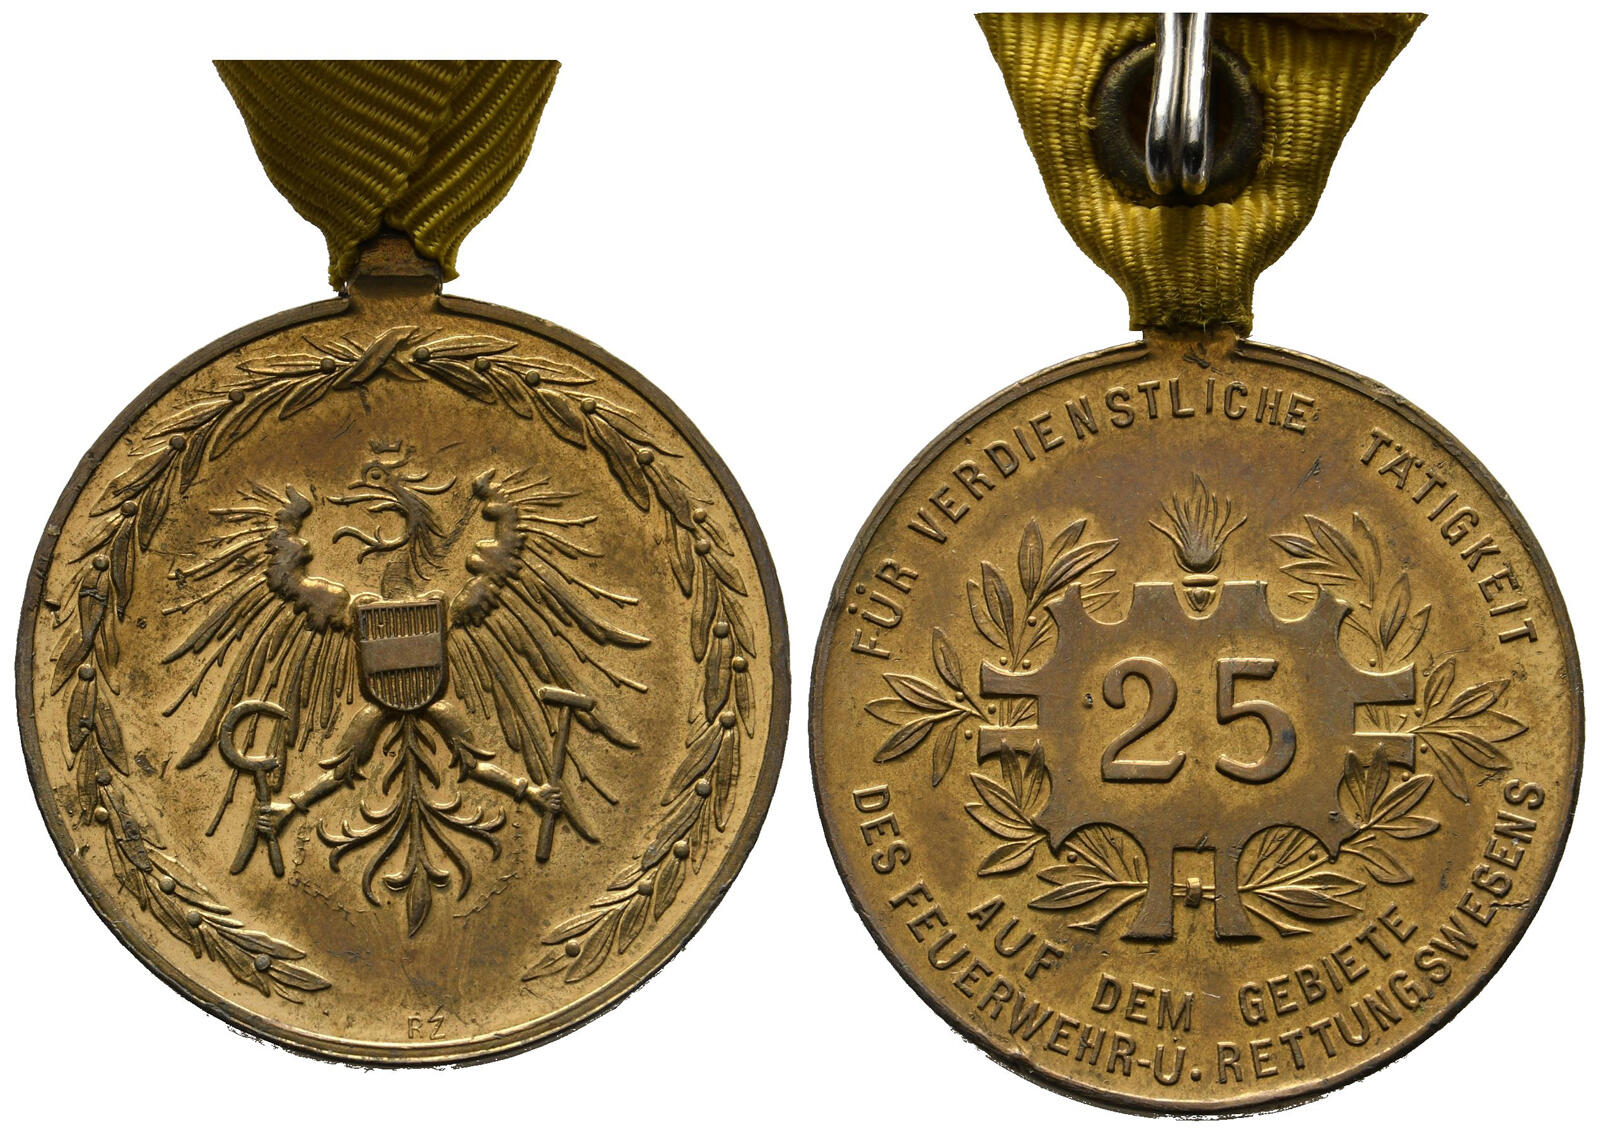 200.10.60.370.30: Historica, Studentica - Honours, international, Austria, 2nd<br />Republic